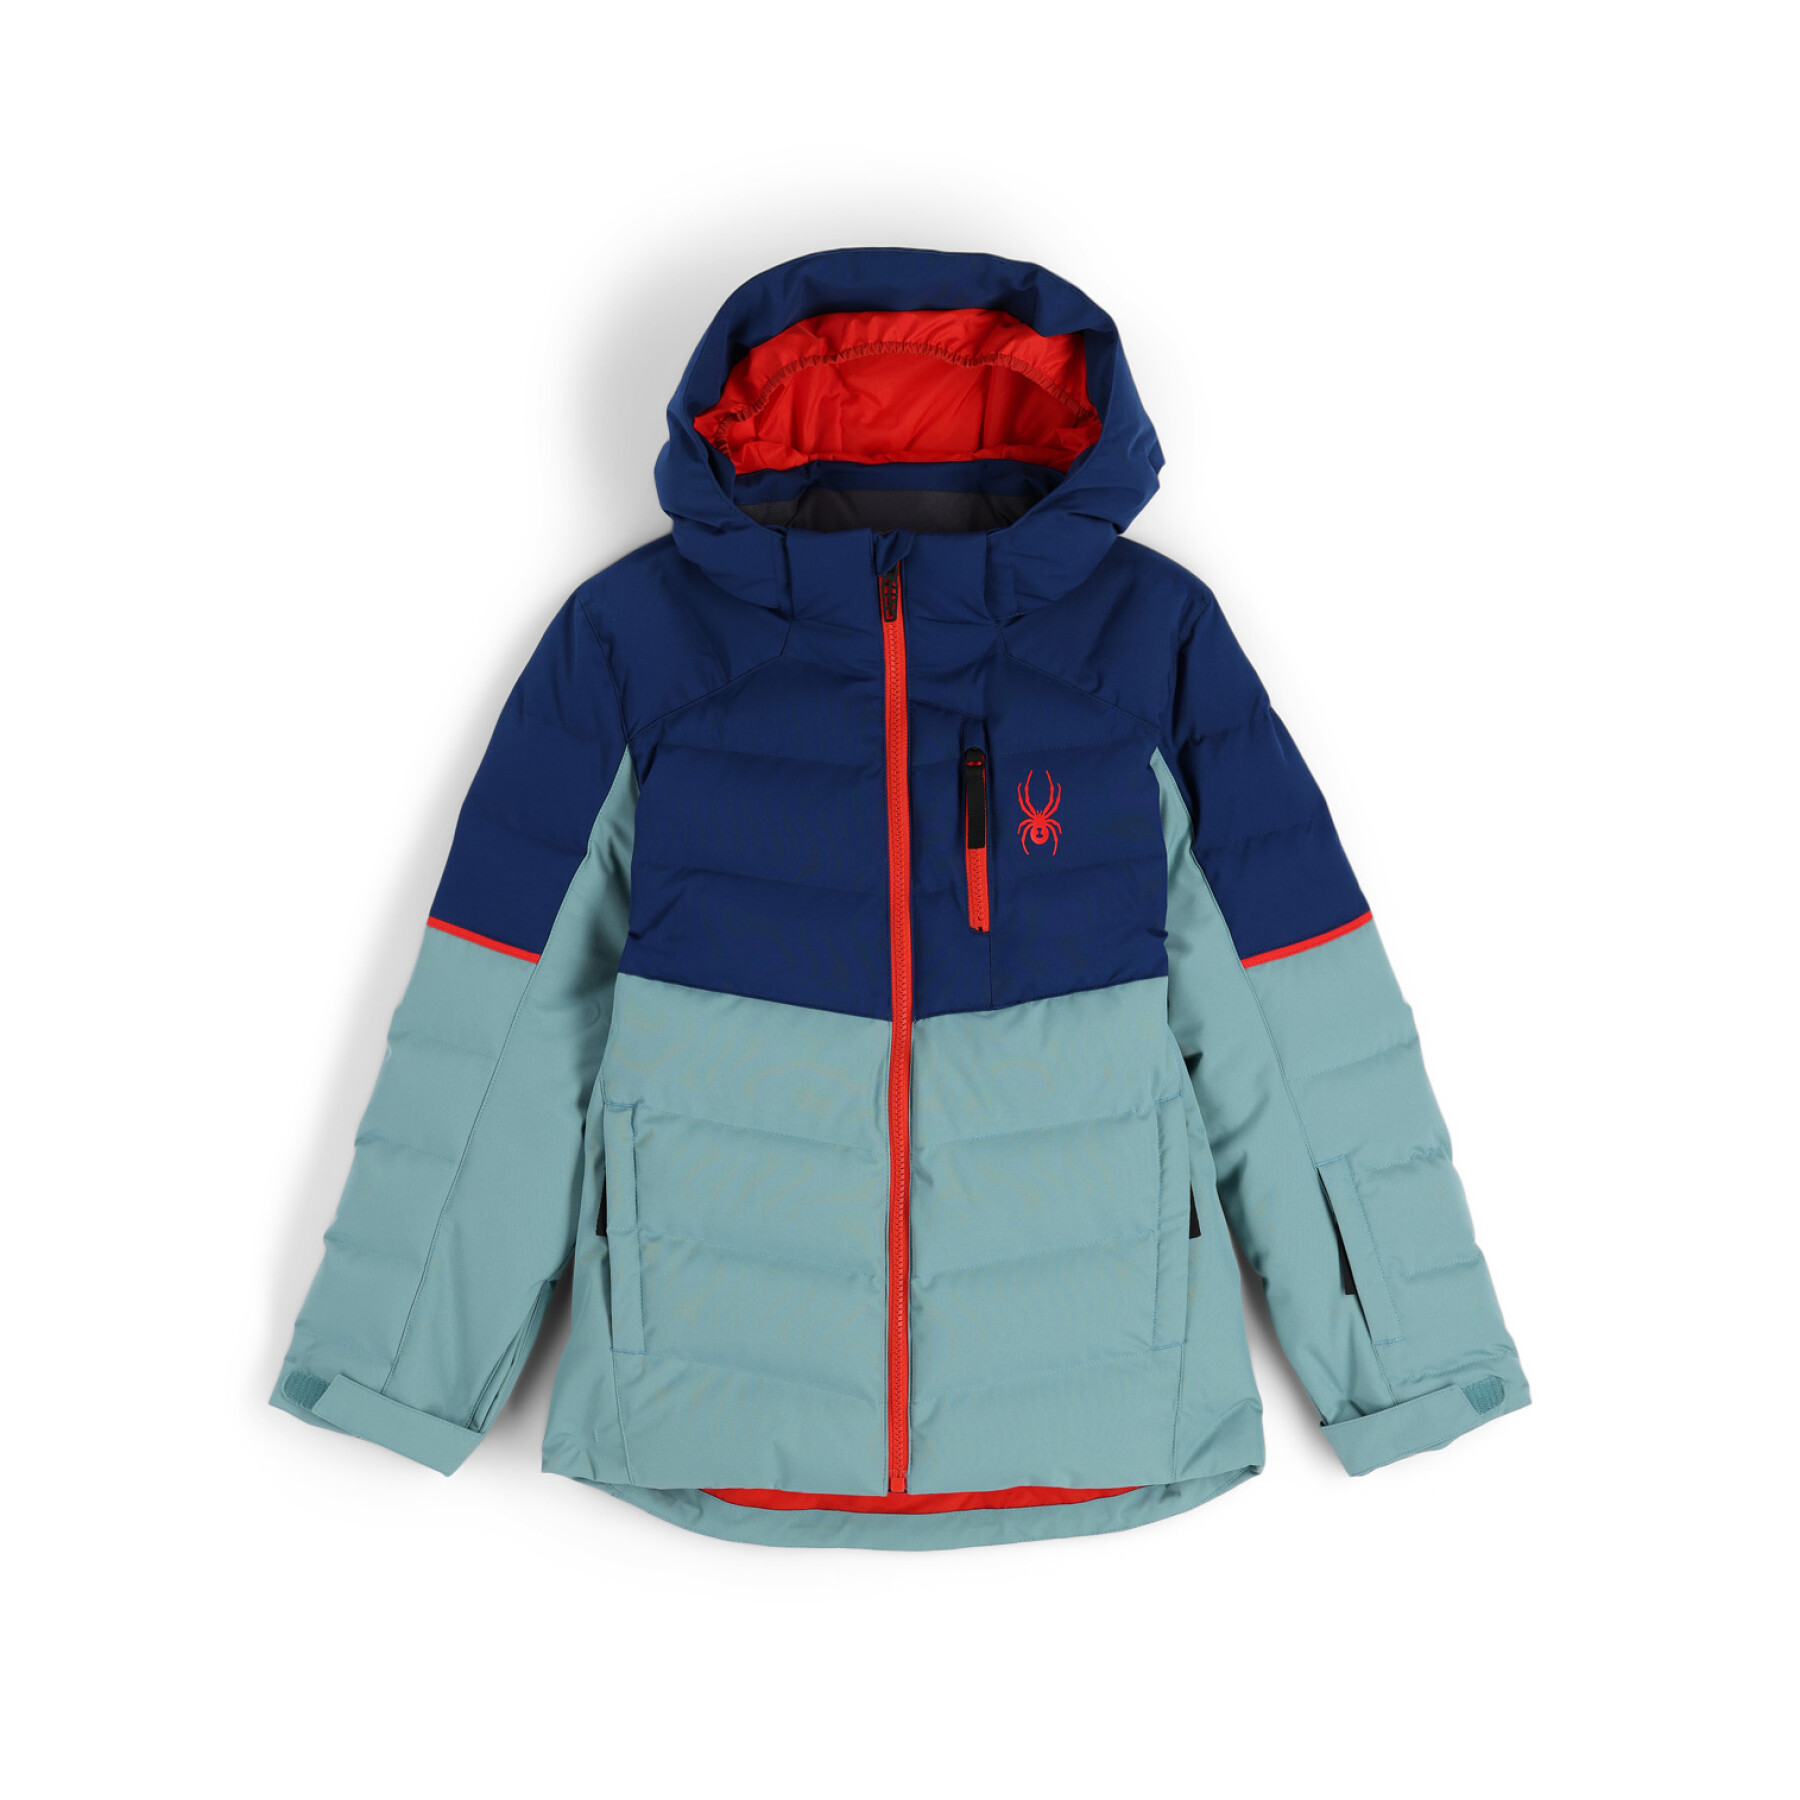 Children's ski jacket Spyder Impulse